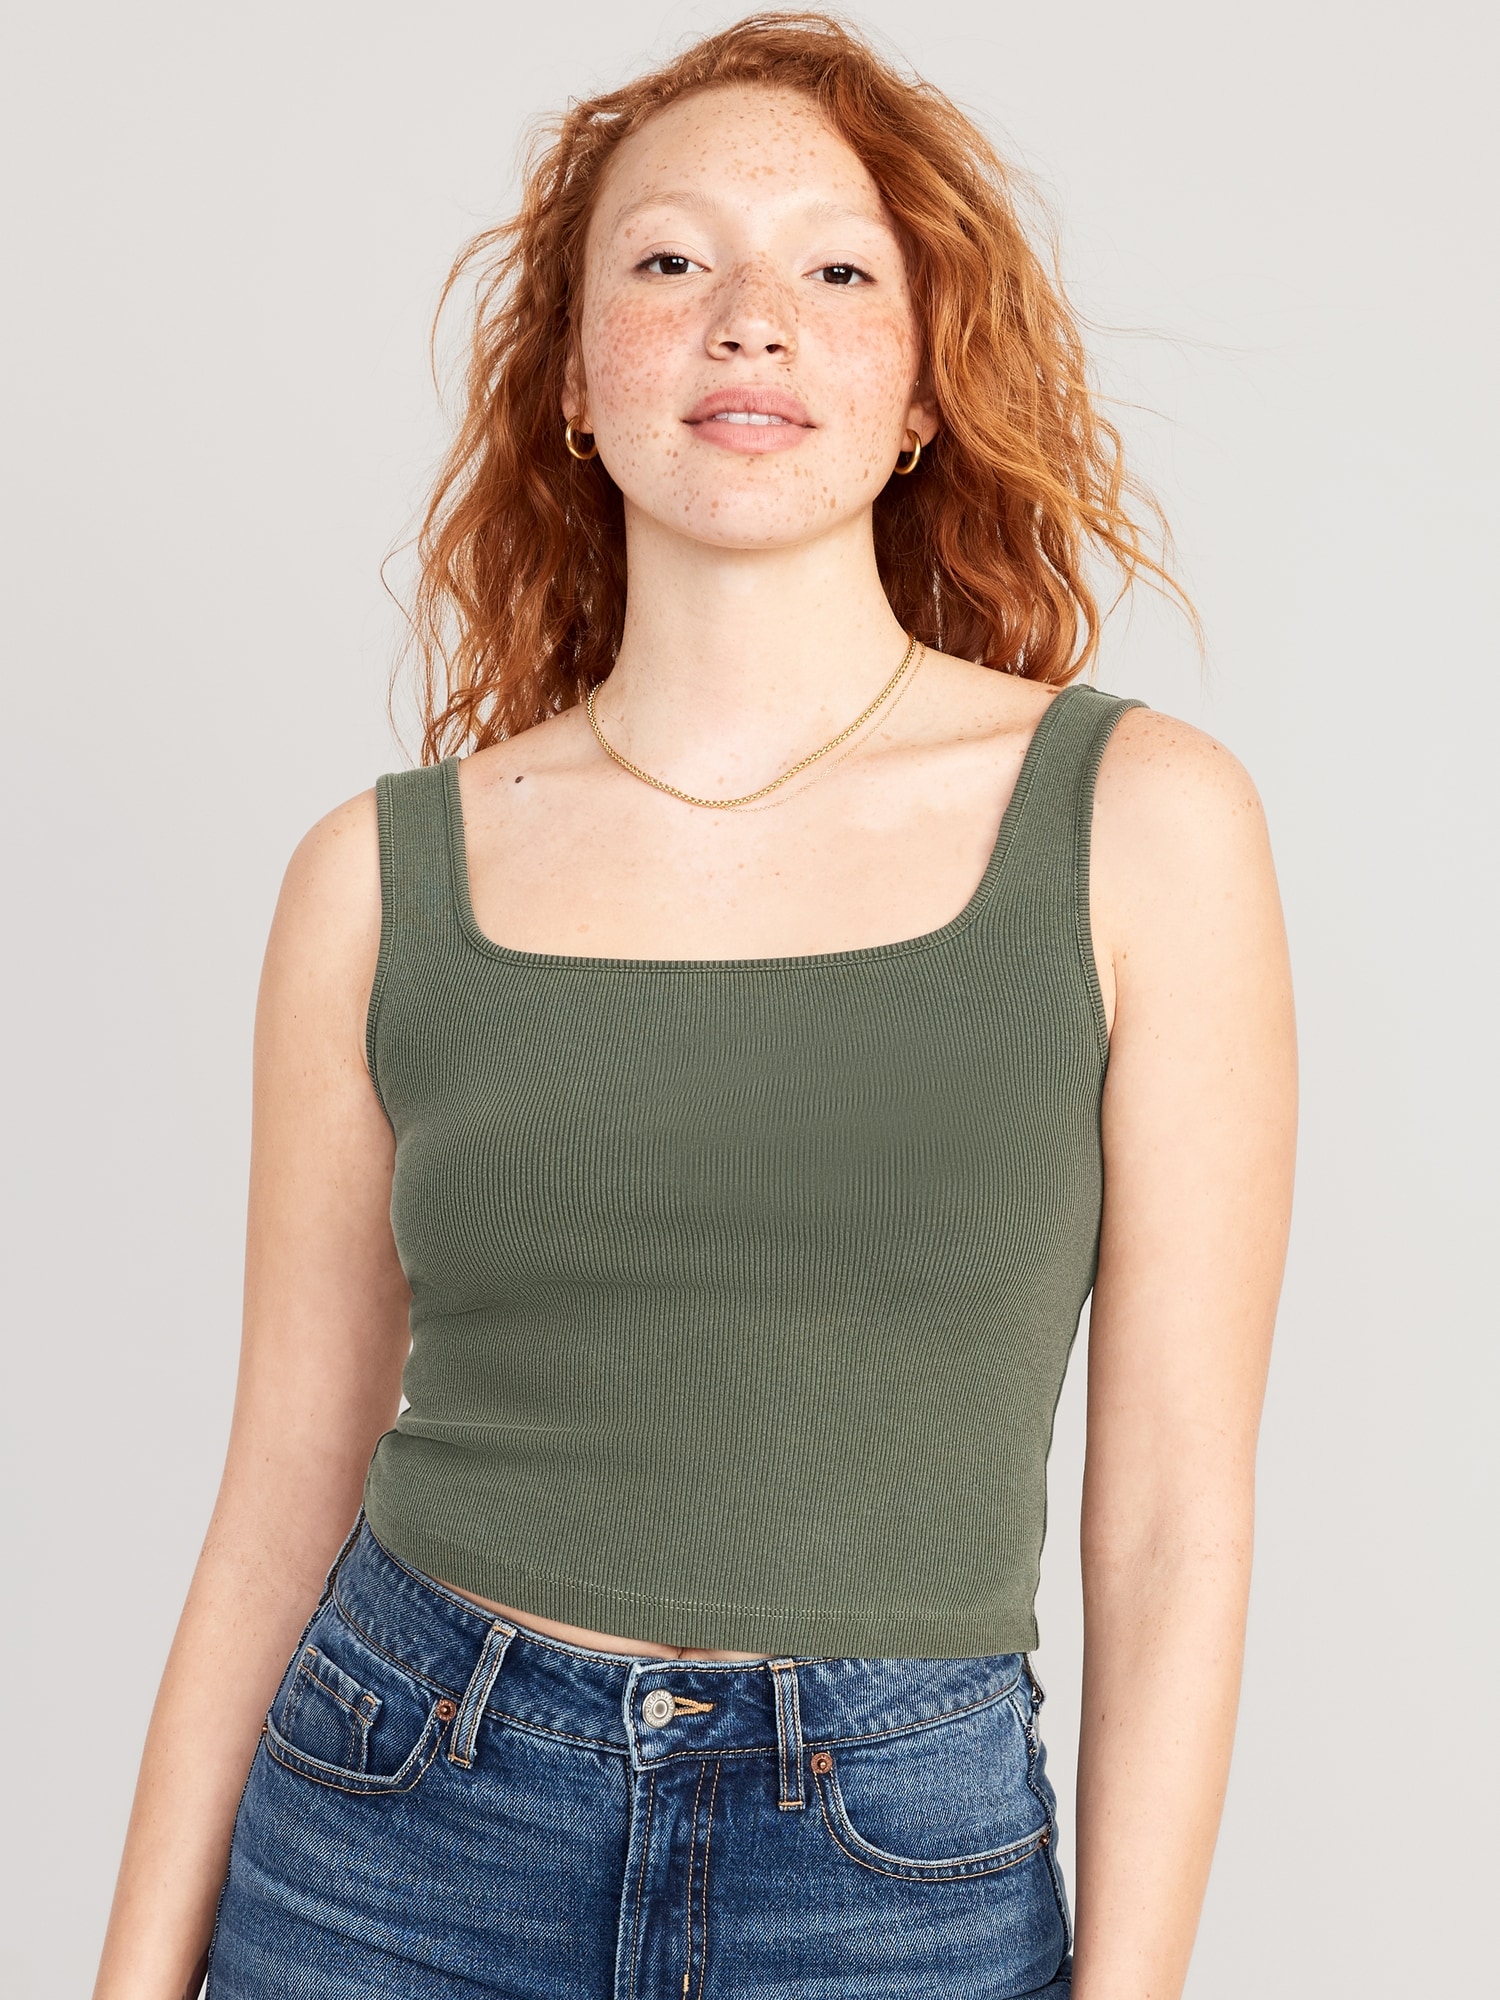 Women Square Neck Sling Plain Tank Tops Slim Fit Summer Sleeveless T-shirt